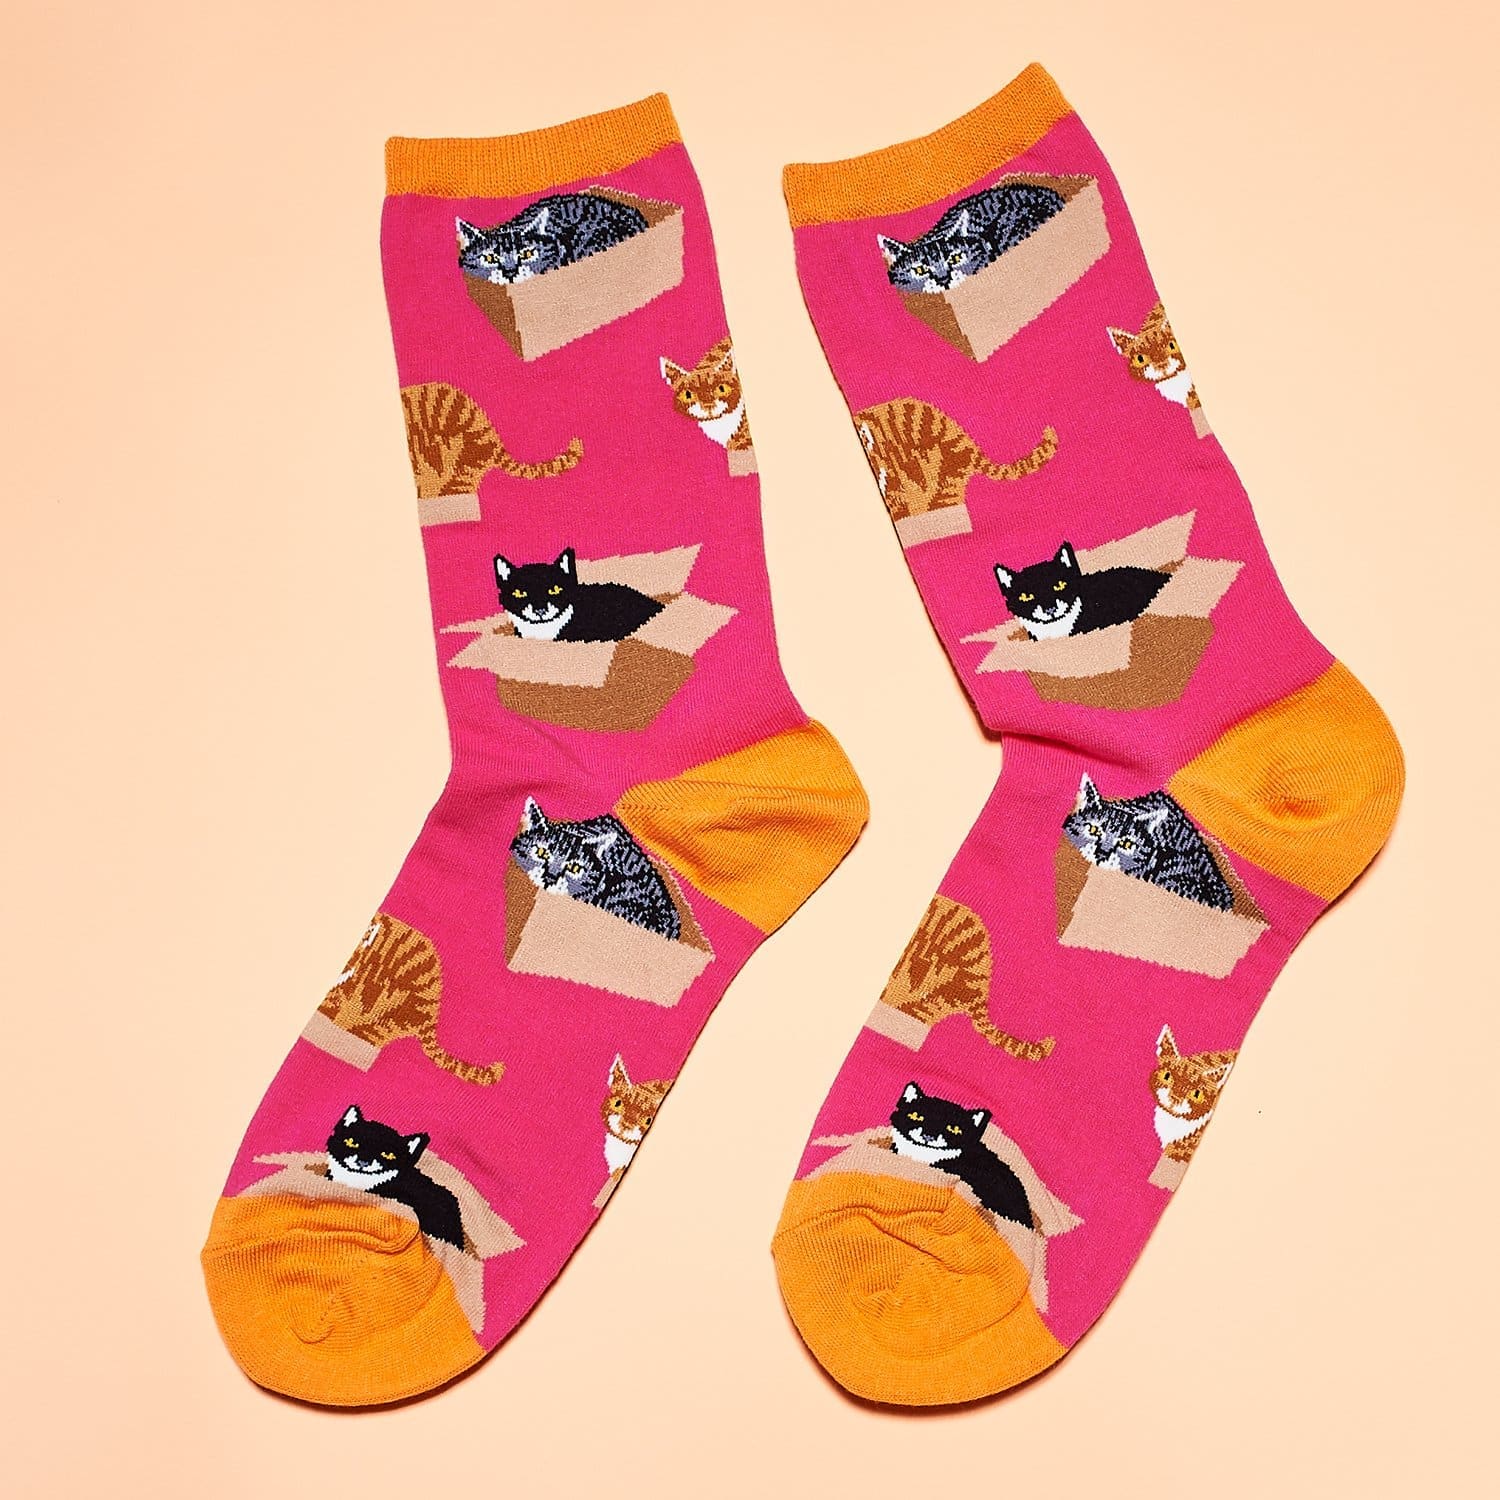 Cat In a Box - Women’s Novelty Socks Animal Novelty - Cat -